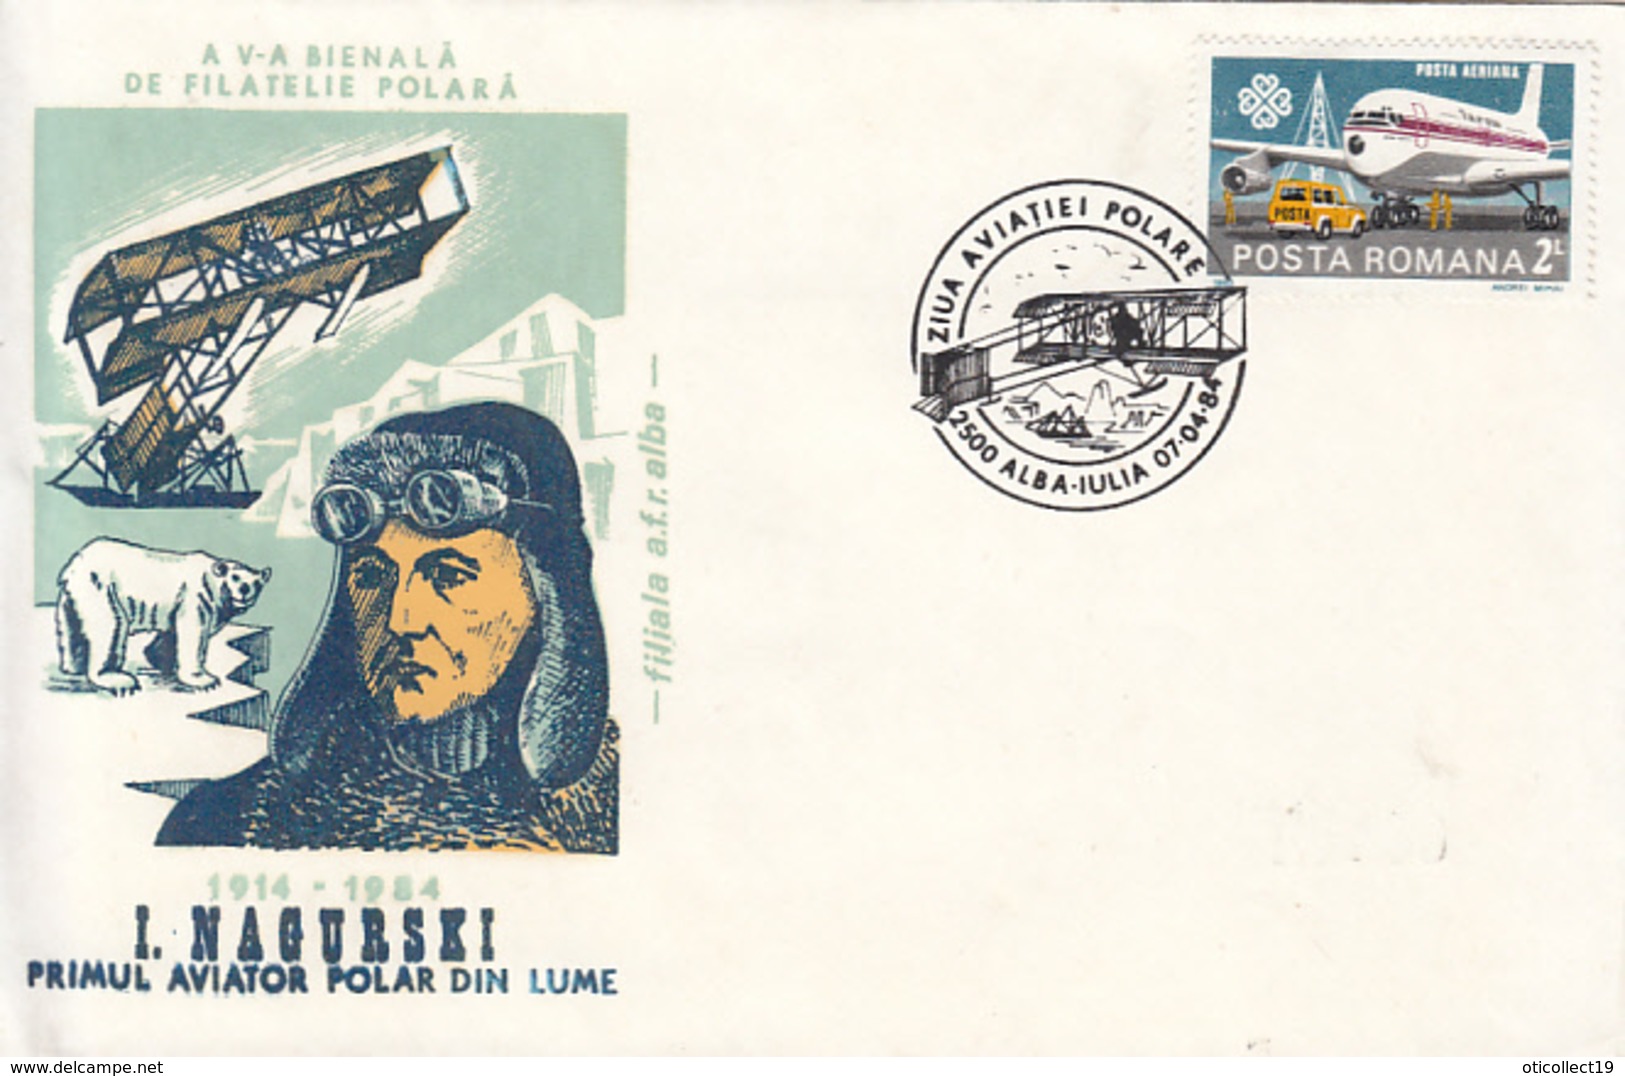 POLAR FLIGHTS, I. NAGURSKI, FIRST POLAR FLIGHT, PILOT, POLAR BEAR, SPECIAL COVER, 1984, ROMANIA - Polare Flüge